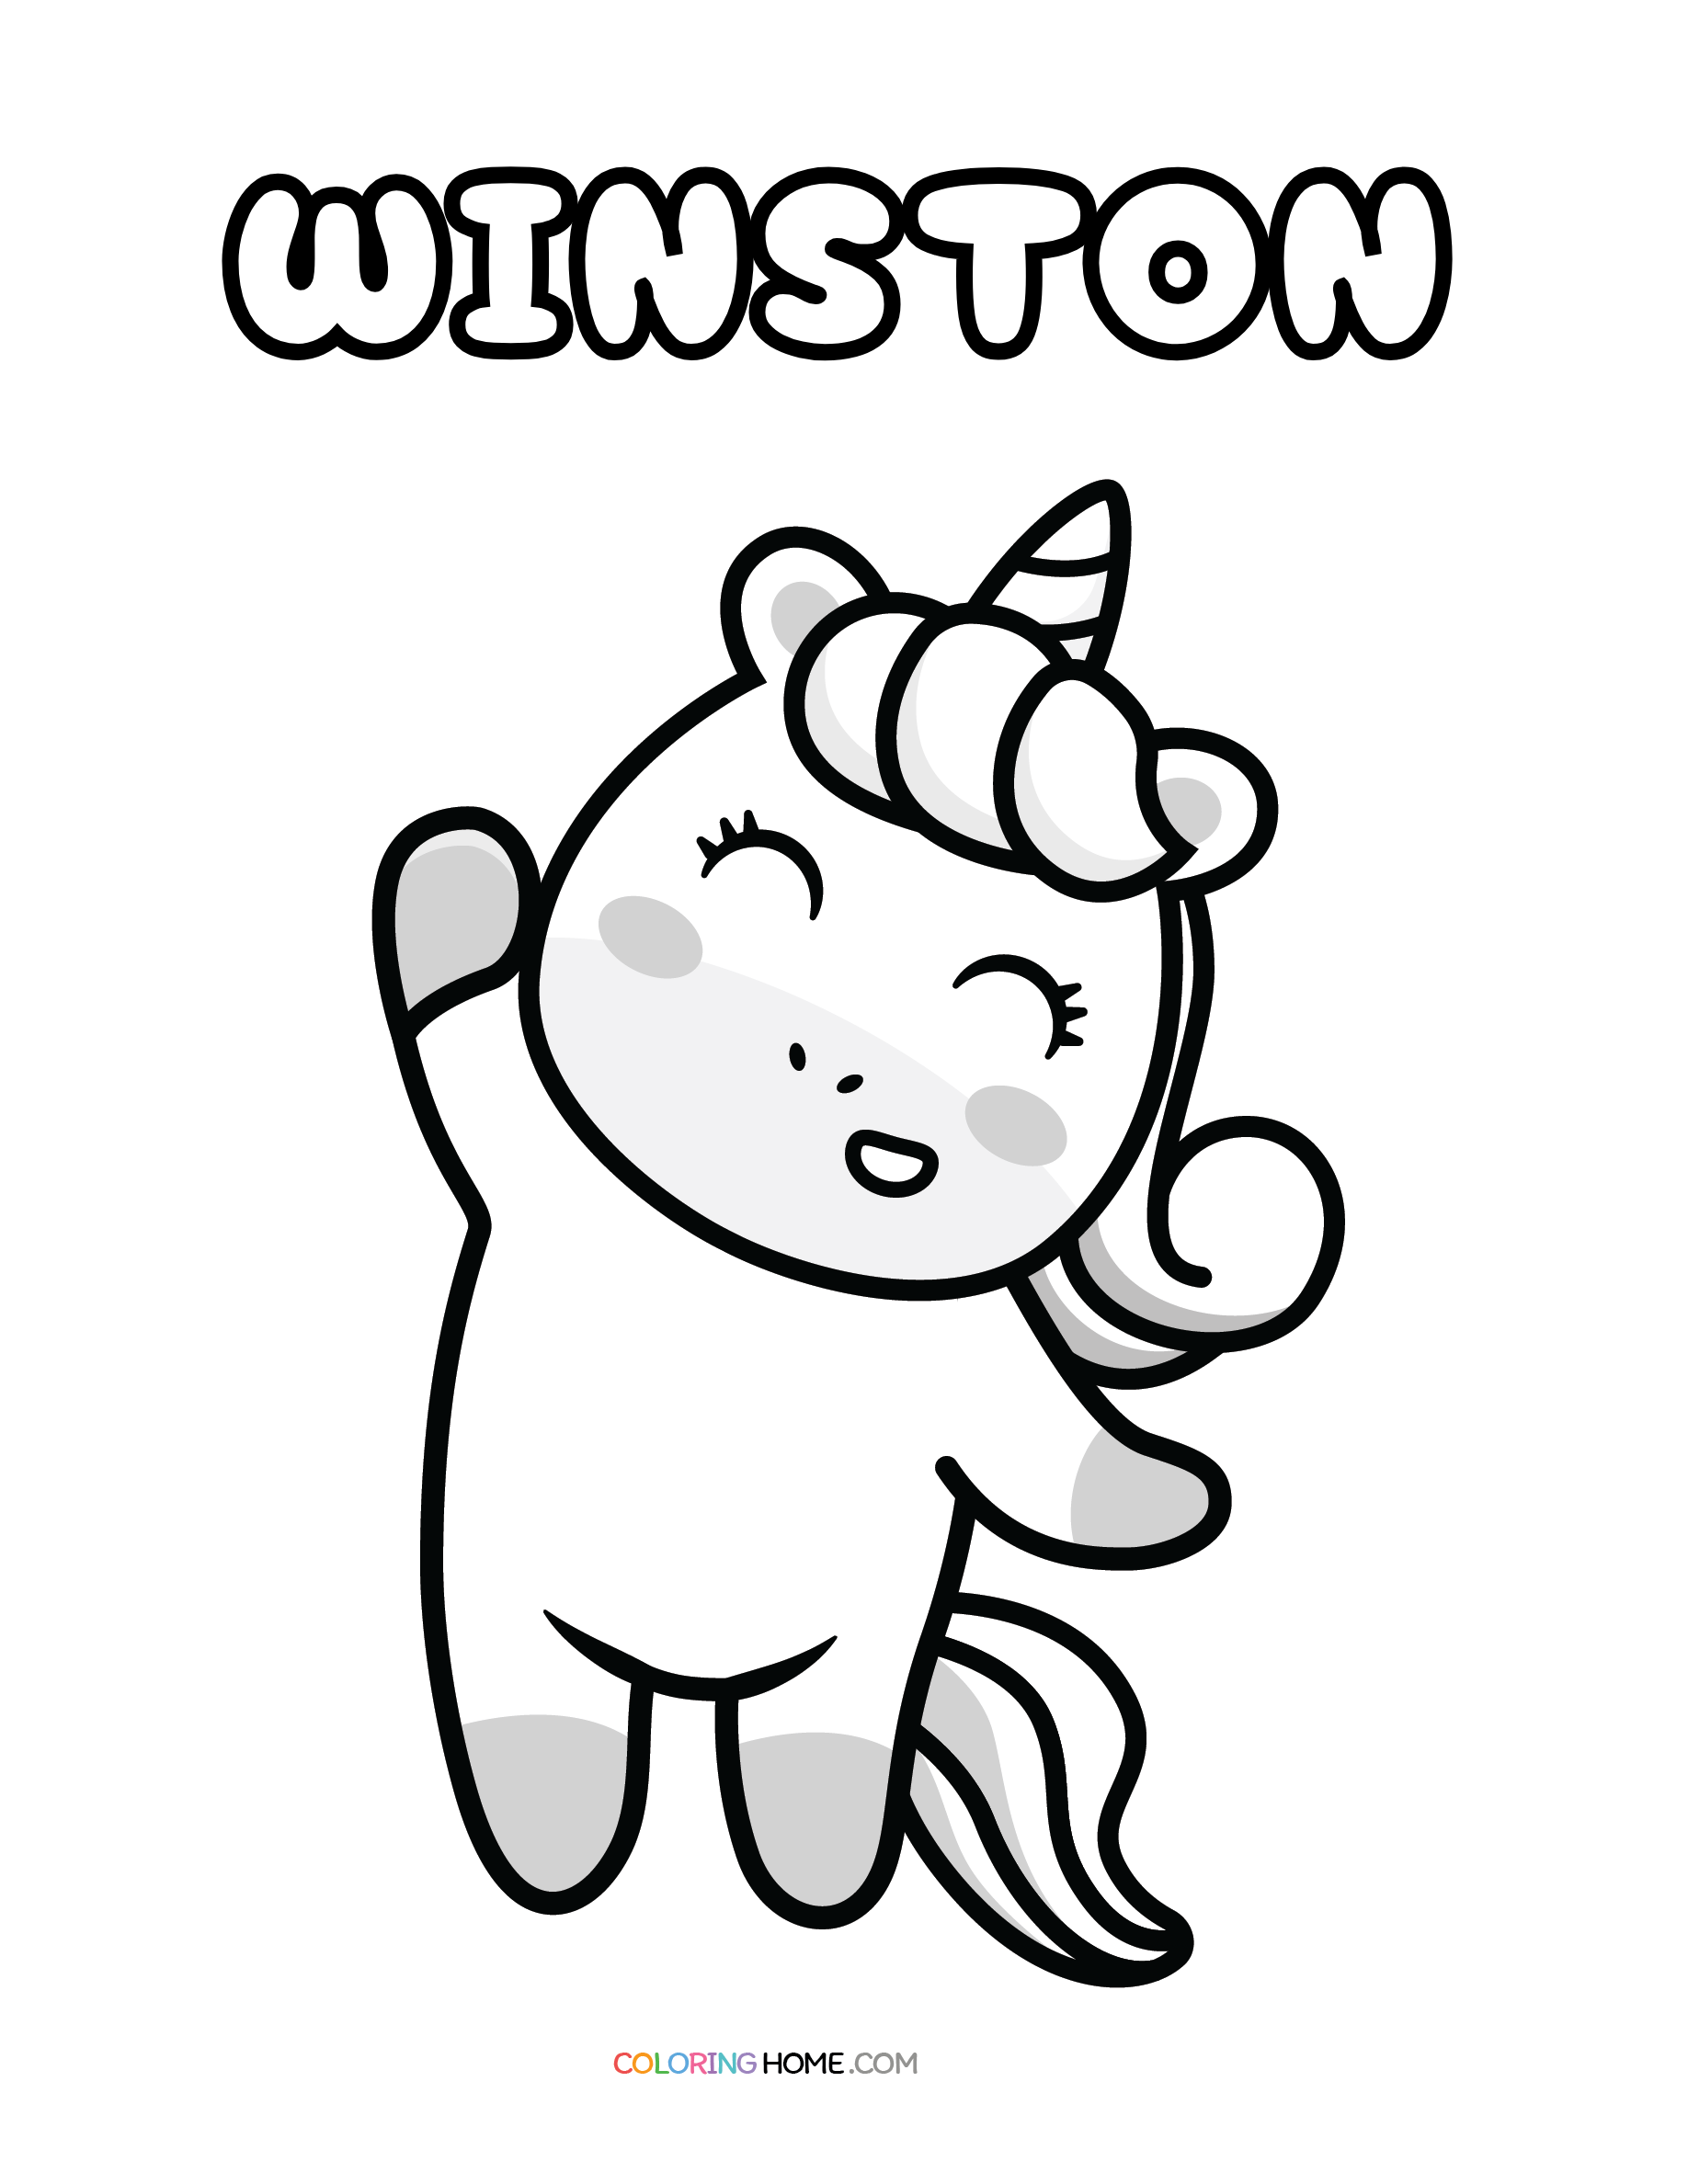 Winston unicorn coloring page